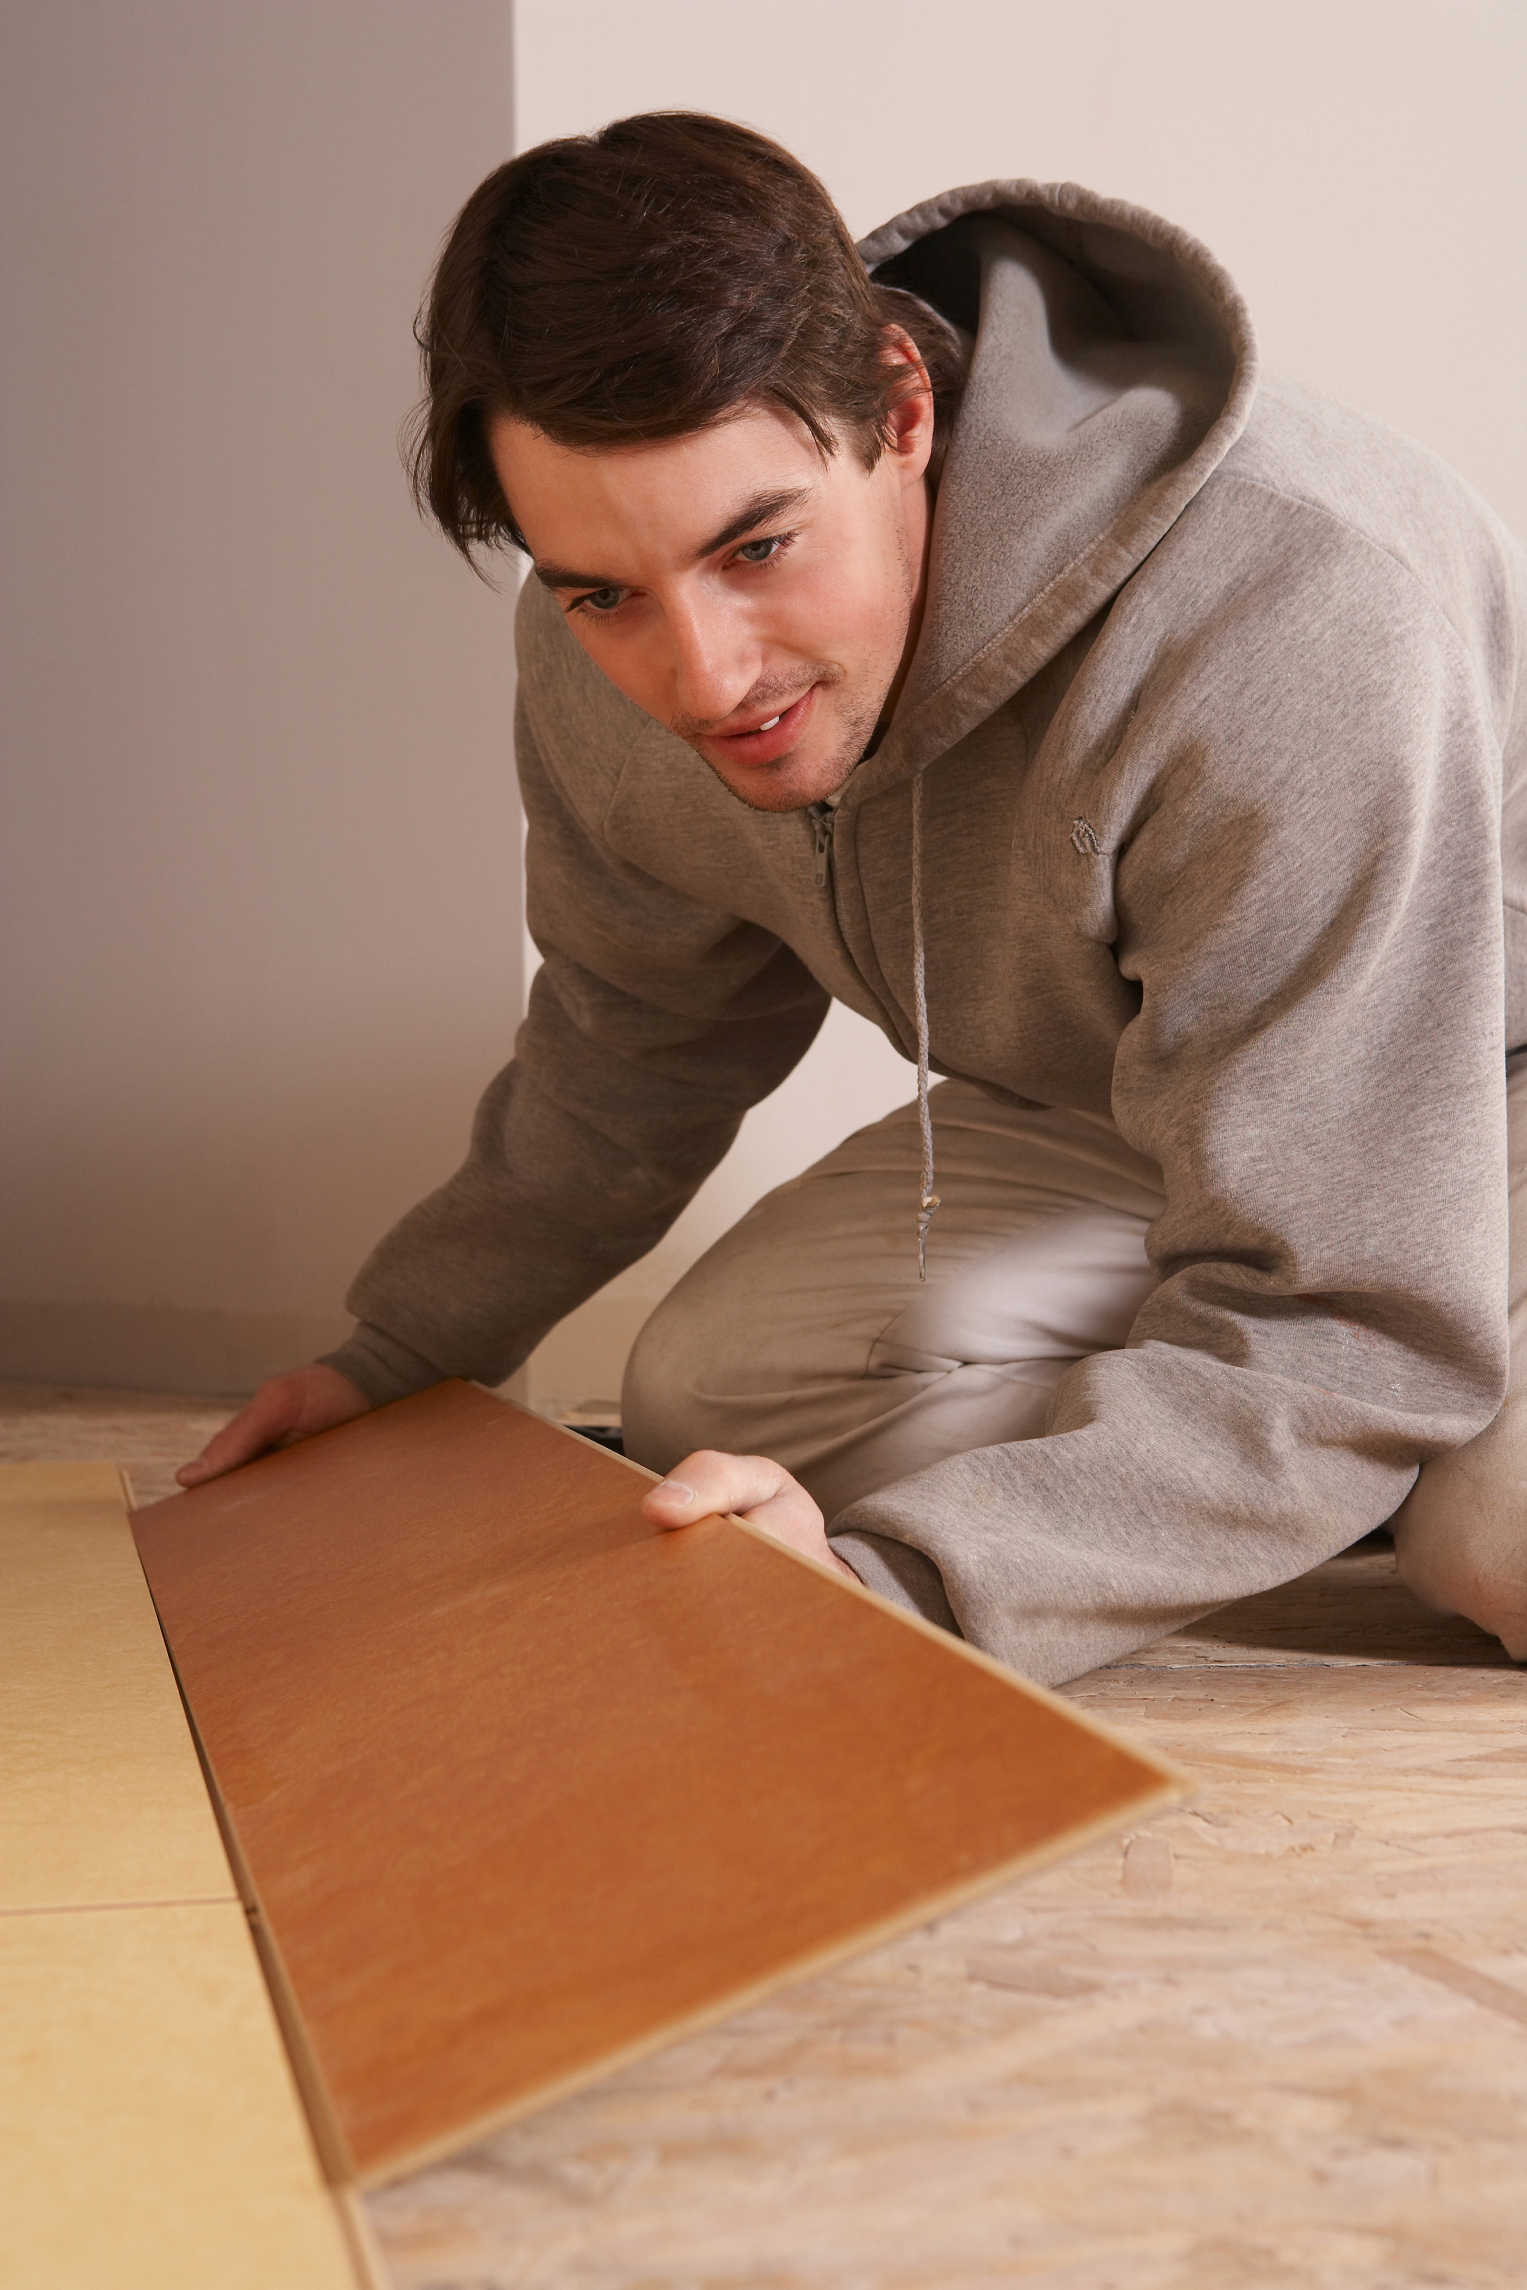 Tfloor Laminate Flooring Spacers : for Installing Laminate Wood, Vinyl Plank, Engineered Hardwood, LVT, Bamboo, Subfloor Panels, or Any Floating